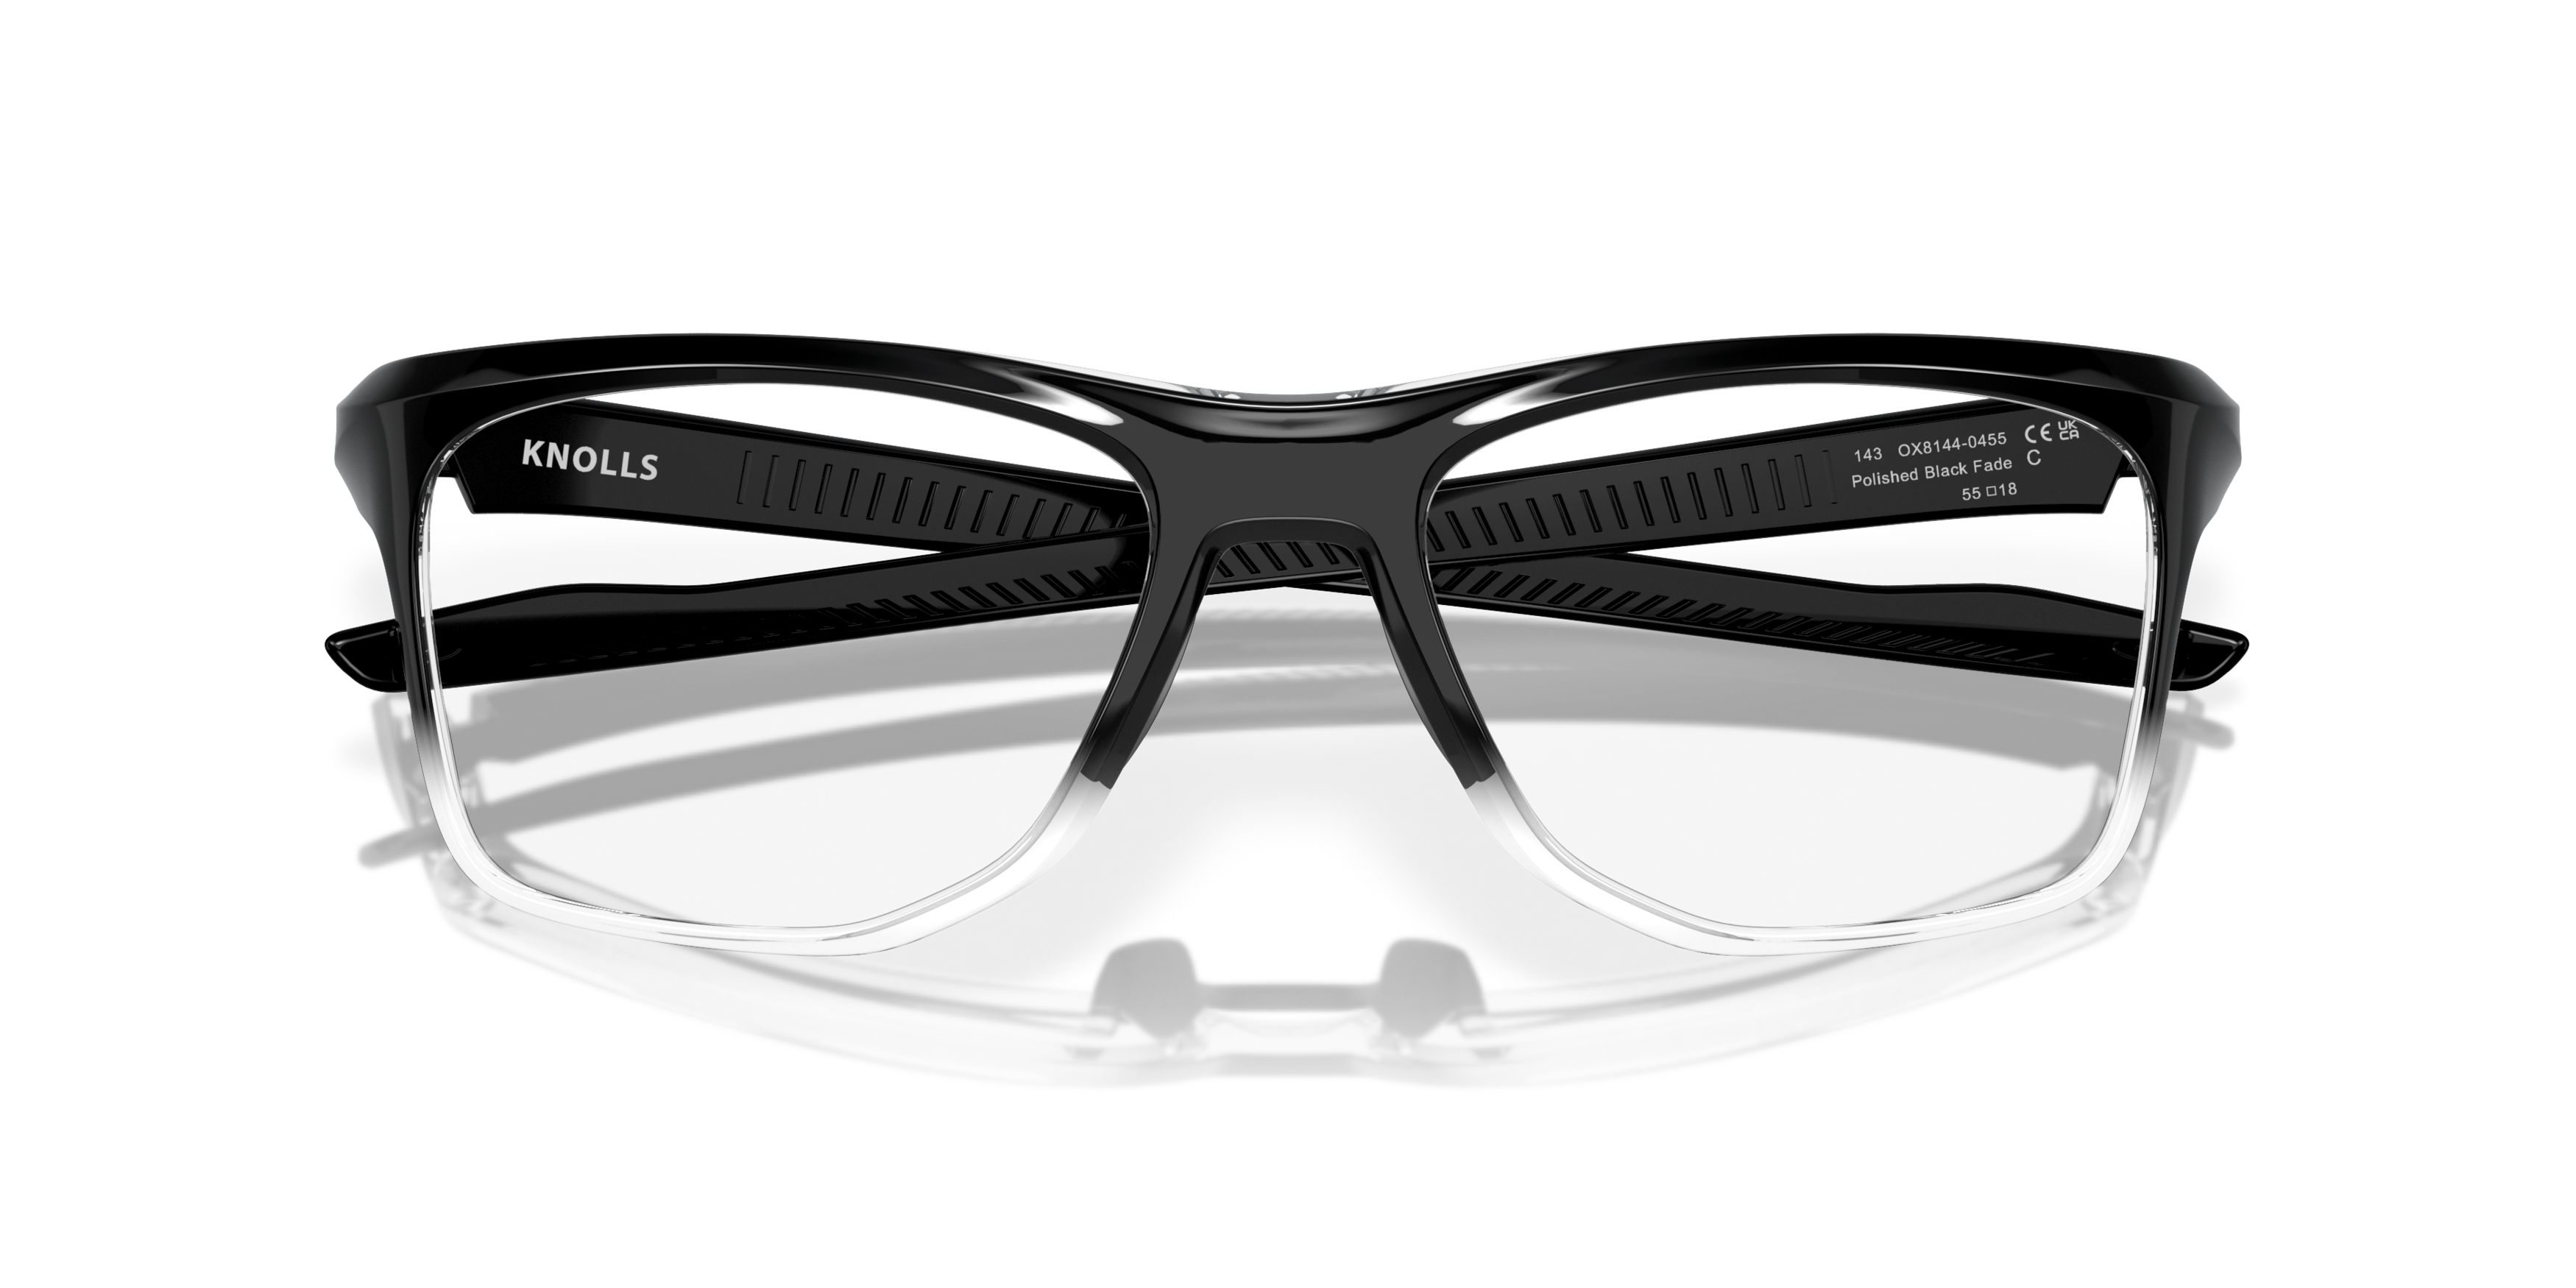 Folded Oakley Knolls OX 8144 Glasses Transparent / Black